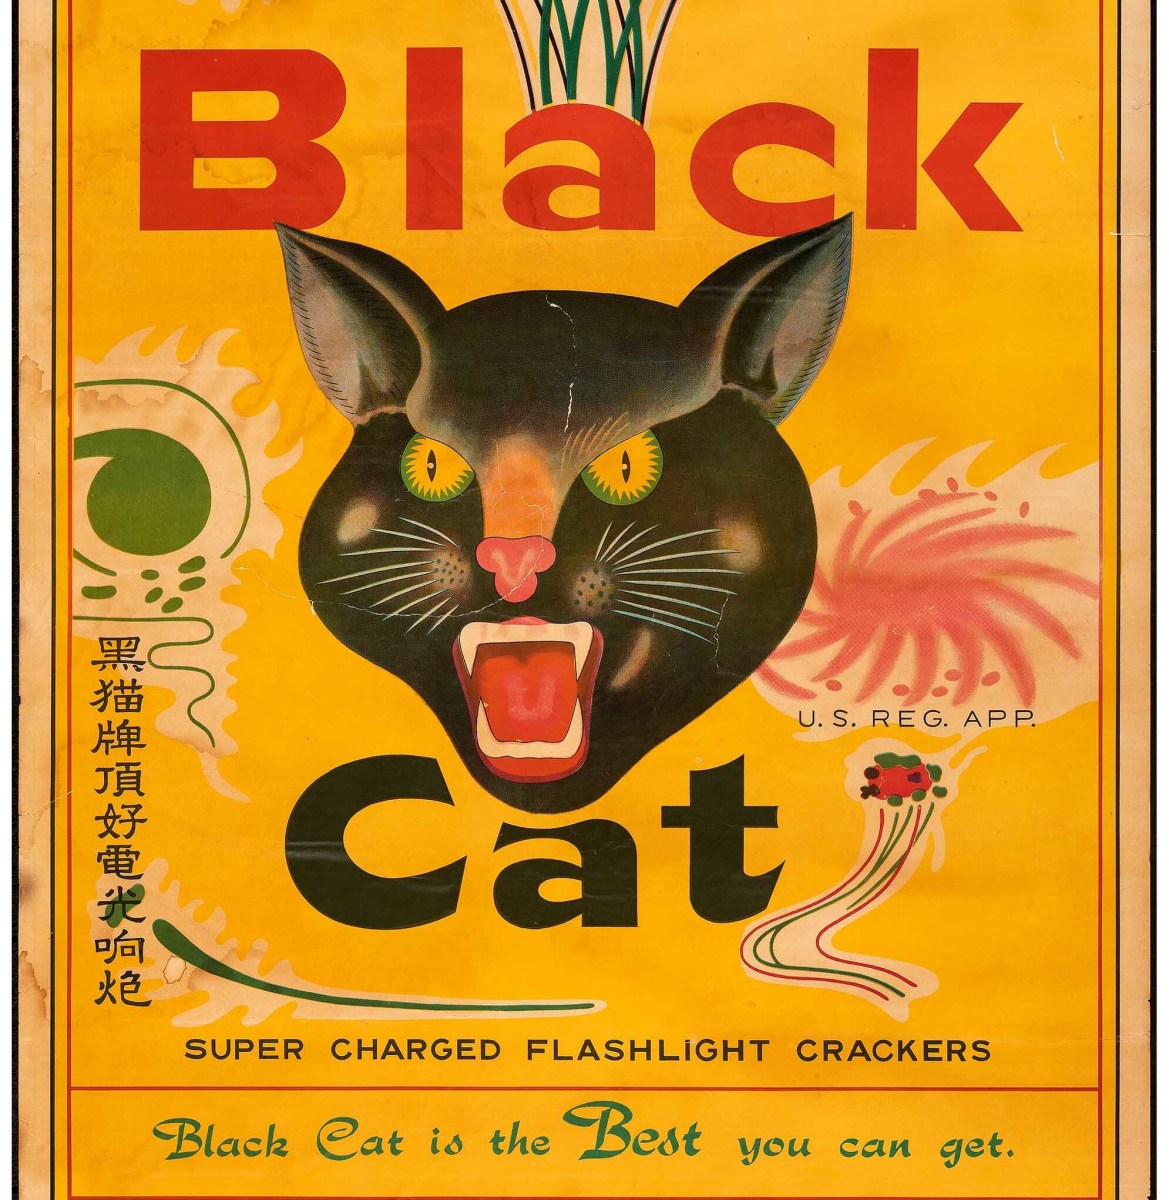 Black Cat Firecrackers